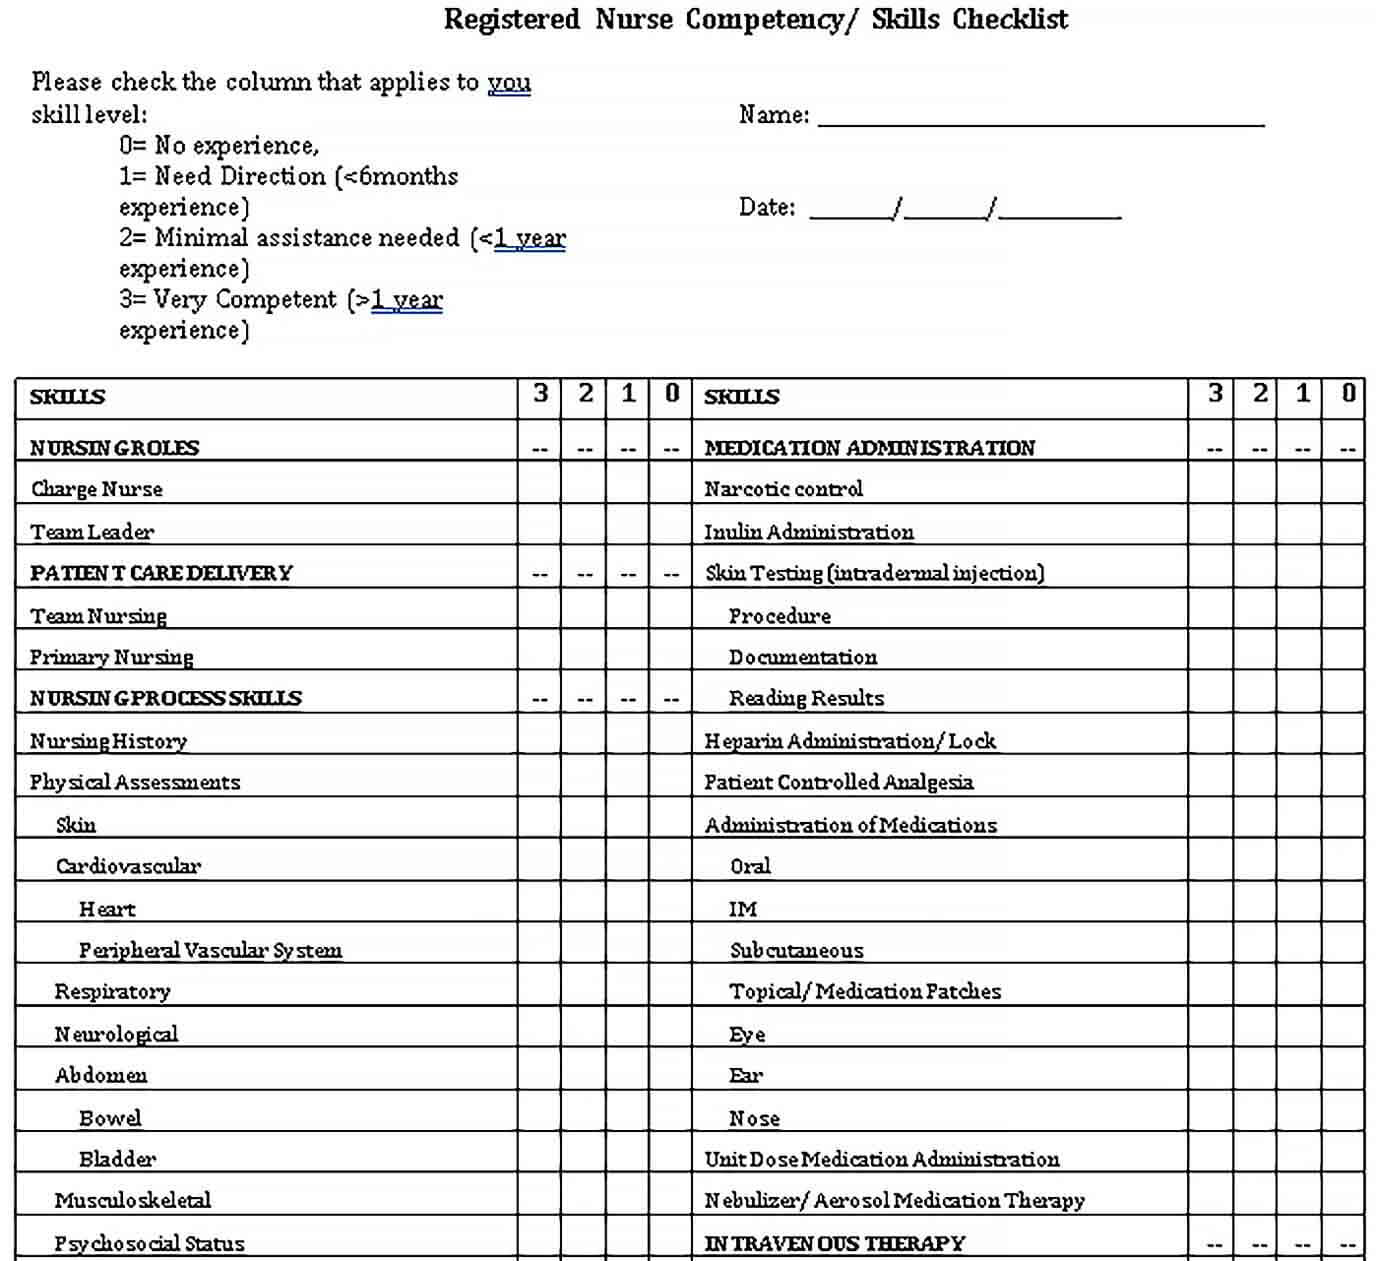 Sample Registered Nurse Compentency Checklist